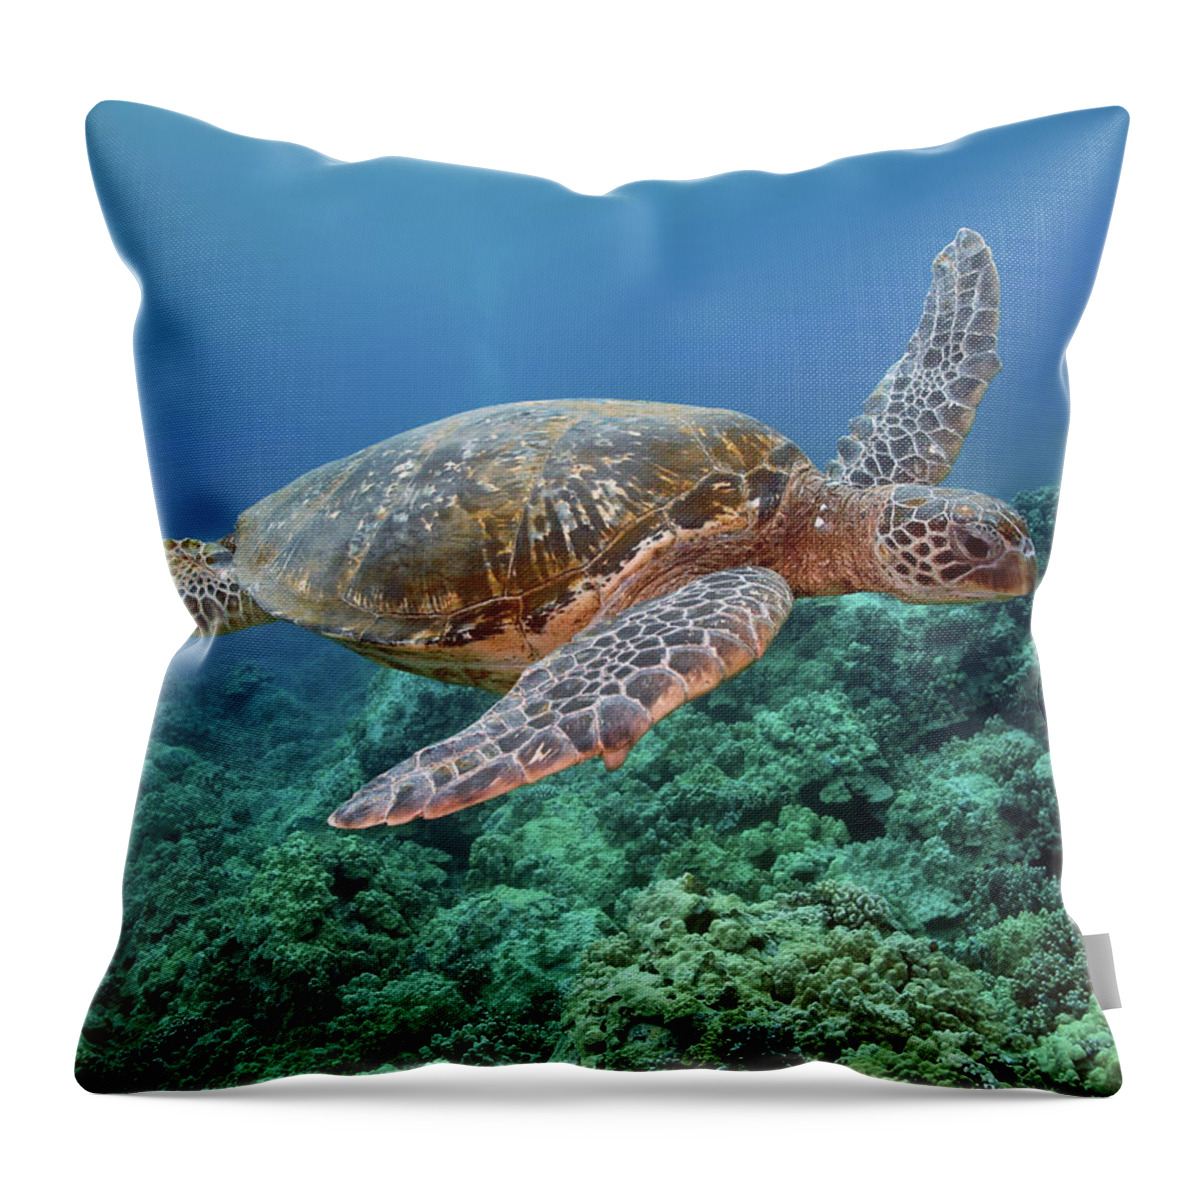 Underwater Throw Pillow featuring the photograph Hawaiian Green Sea Turtle, Kona, Hawaii by Stevedunleavy.com